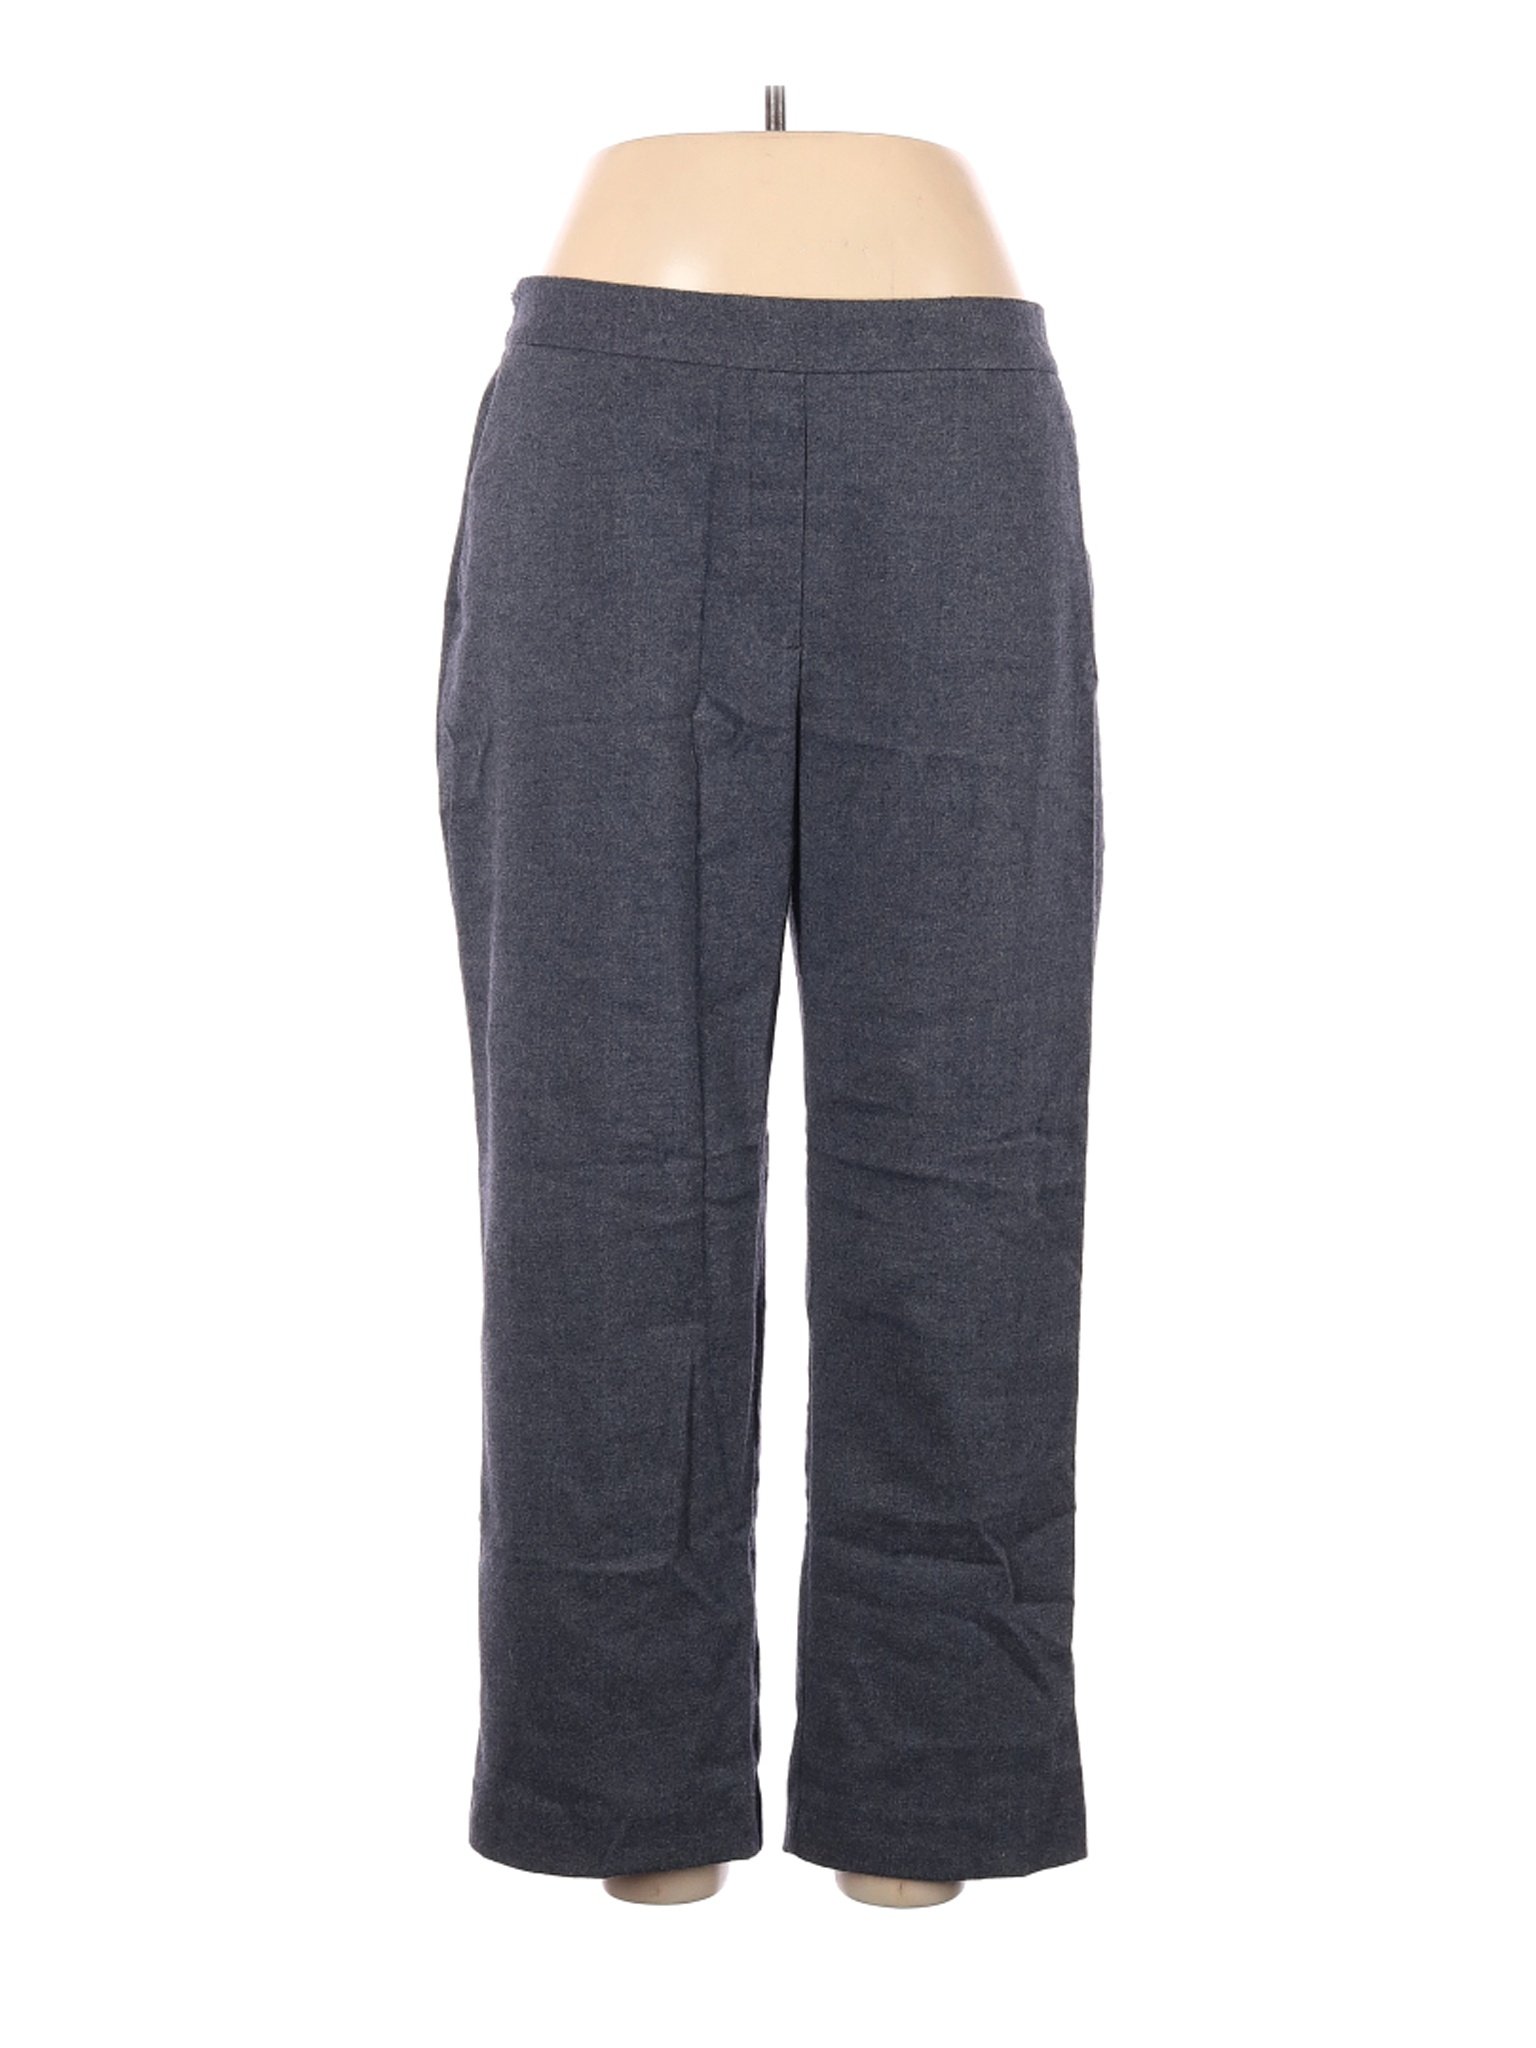 Zara Women Gray Casual Pants XL | eBay